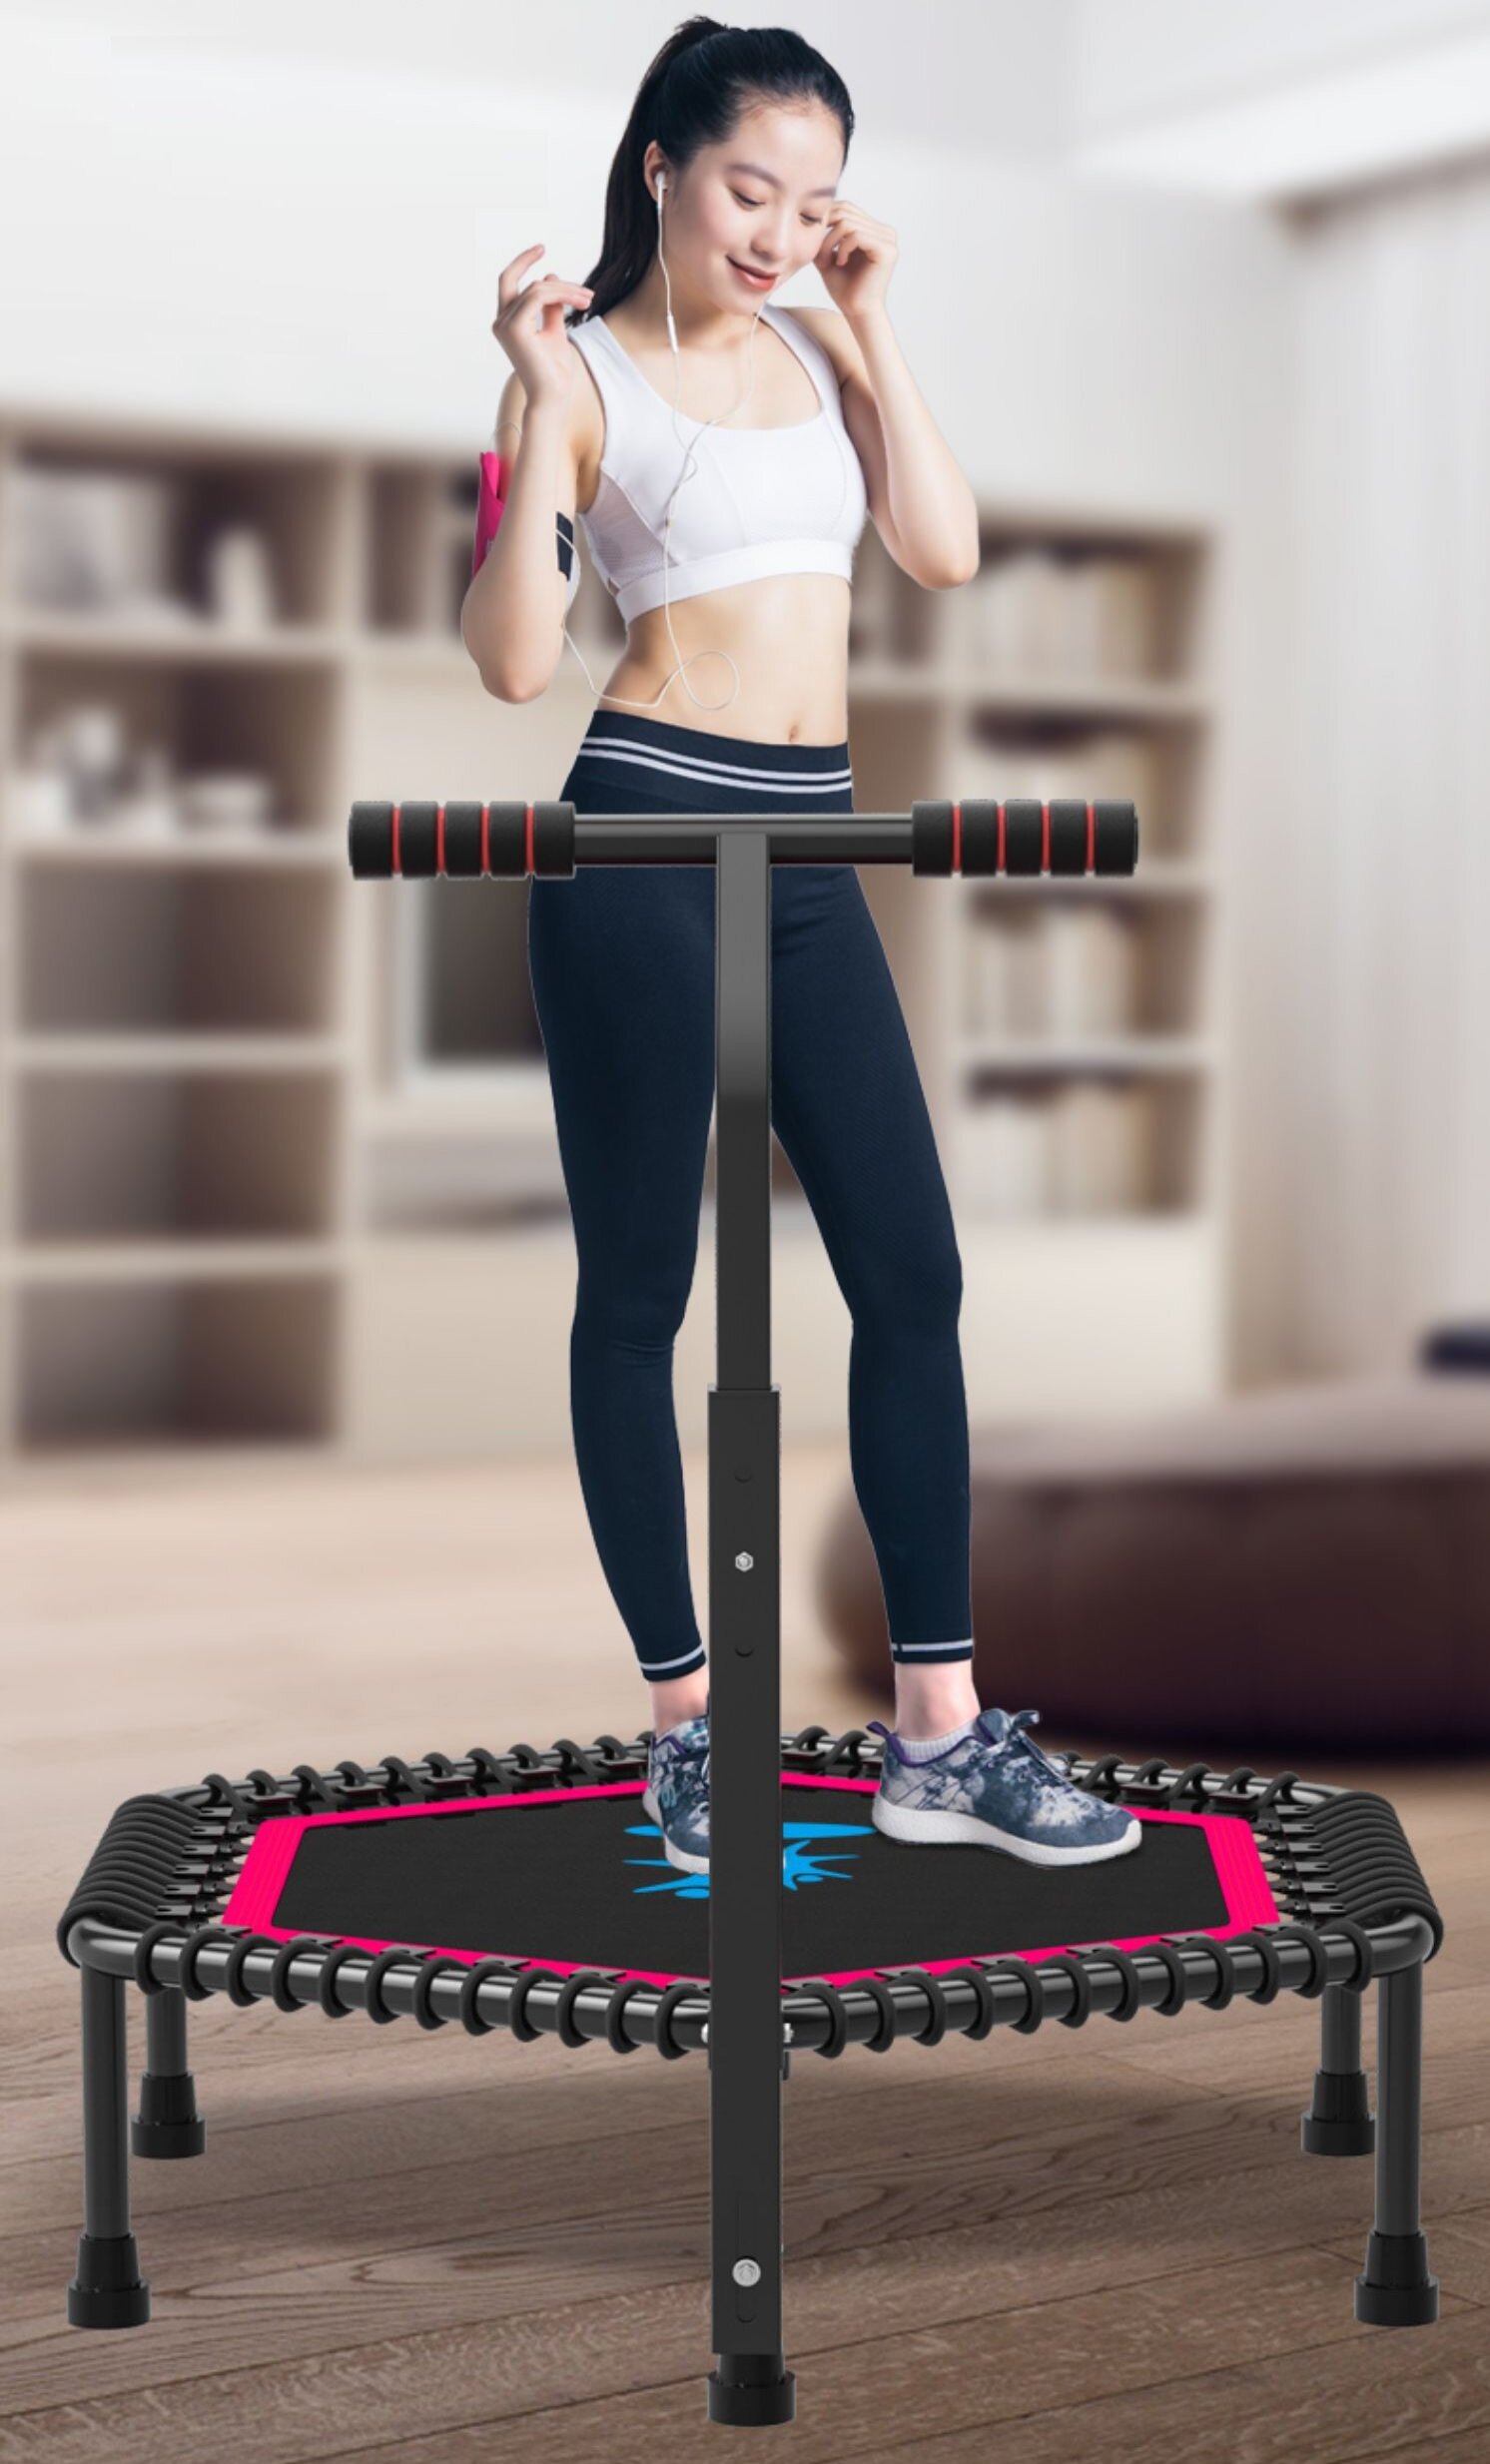 50" 127cm Mini Fitness Rebounder Hexagonal Trampoline Gym Workout Weight Loss 